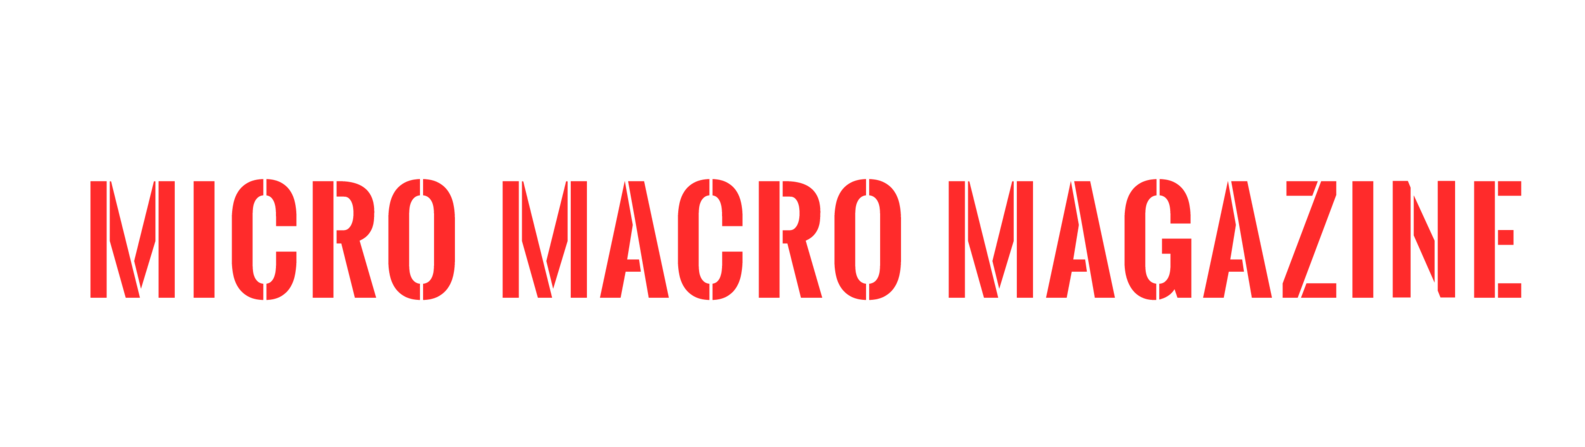 Micro Macro Magazine